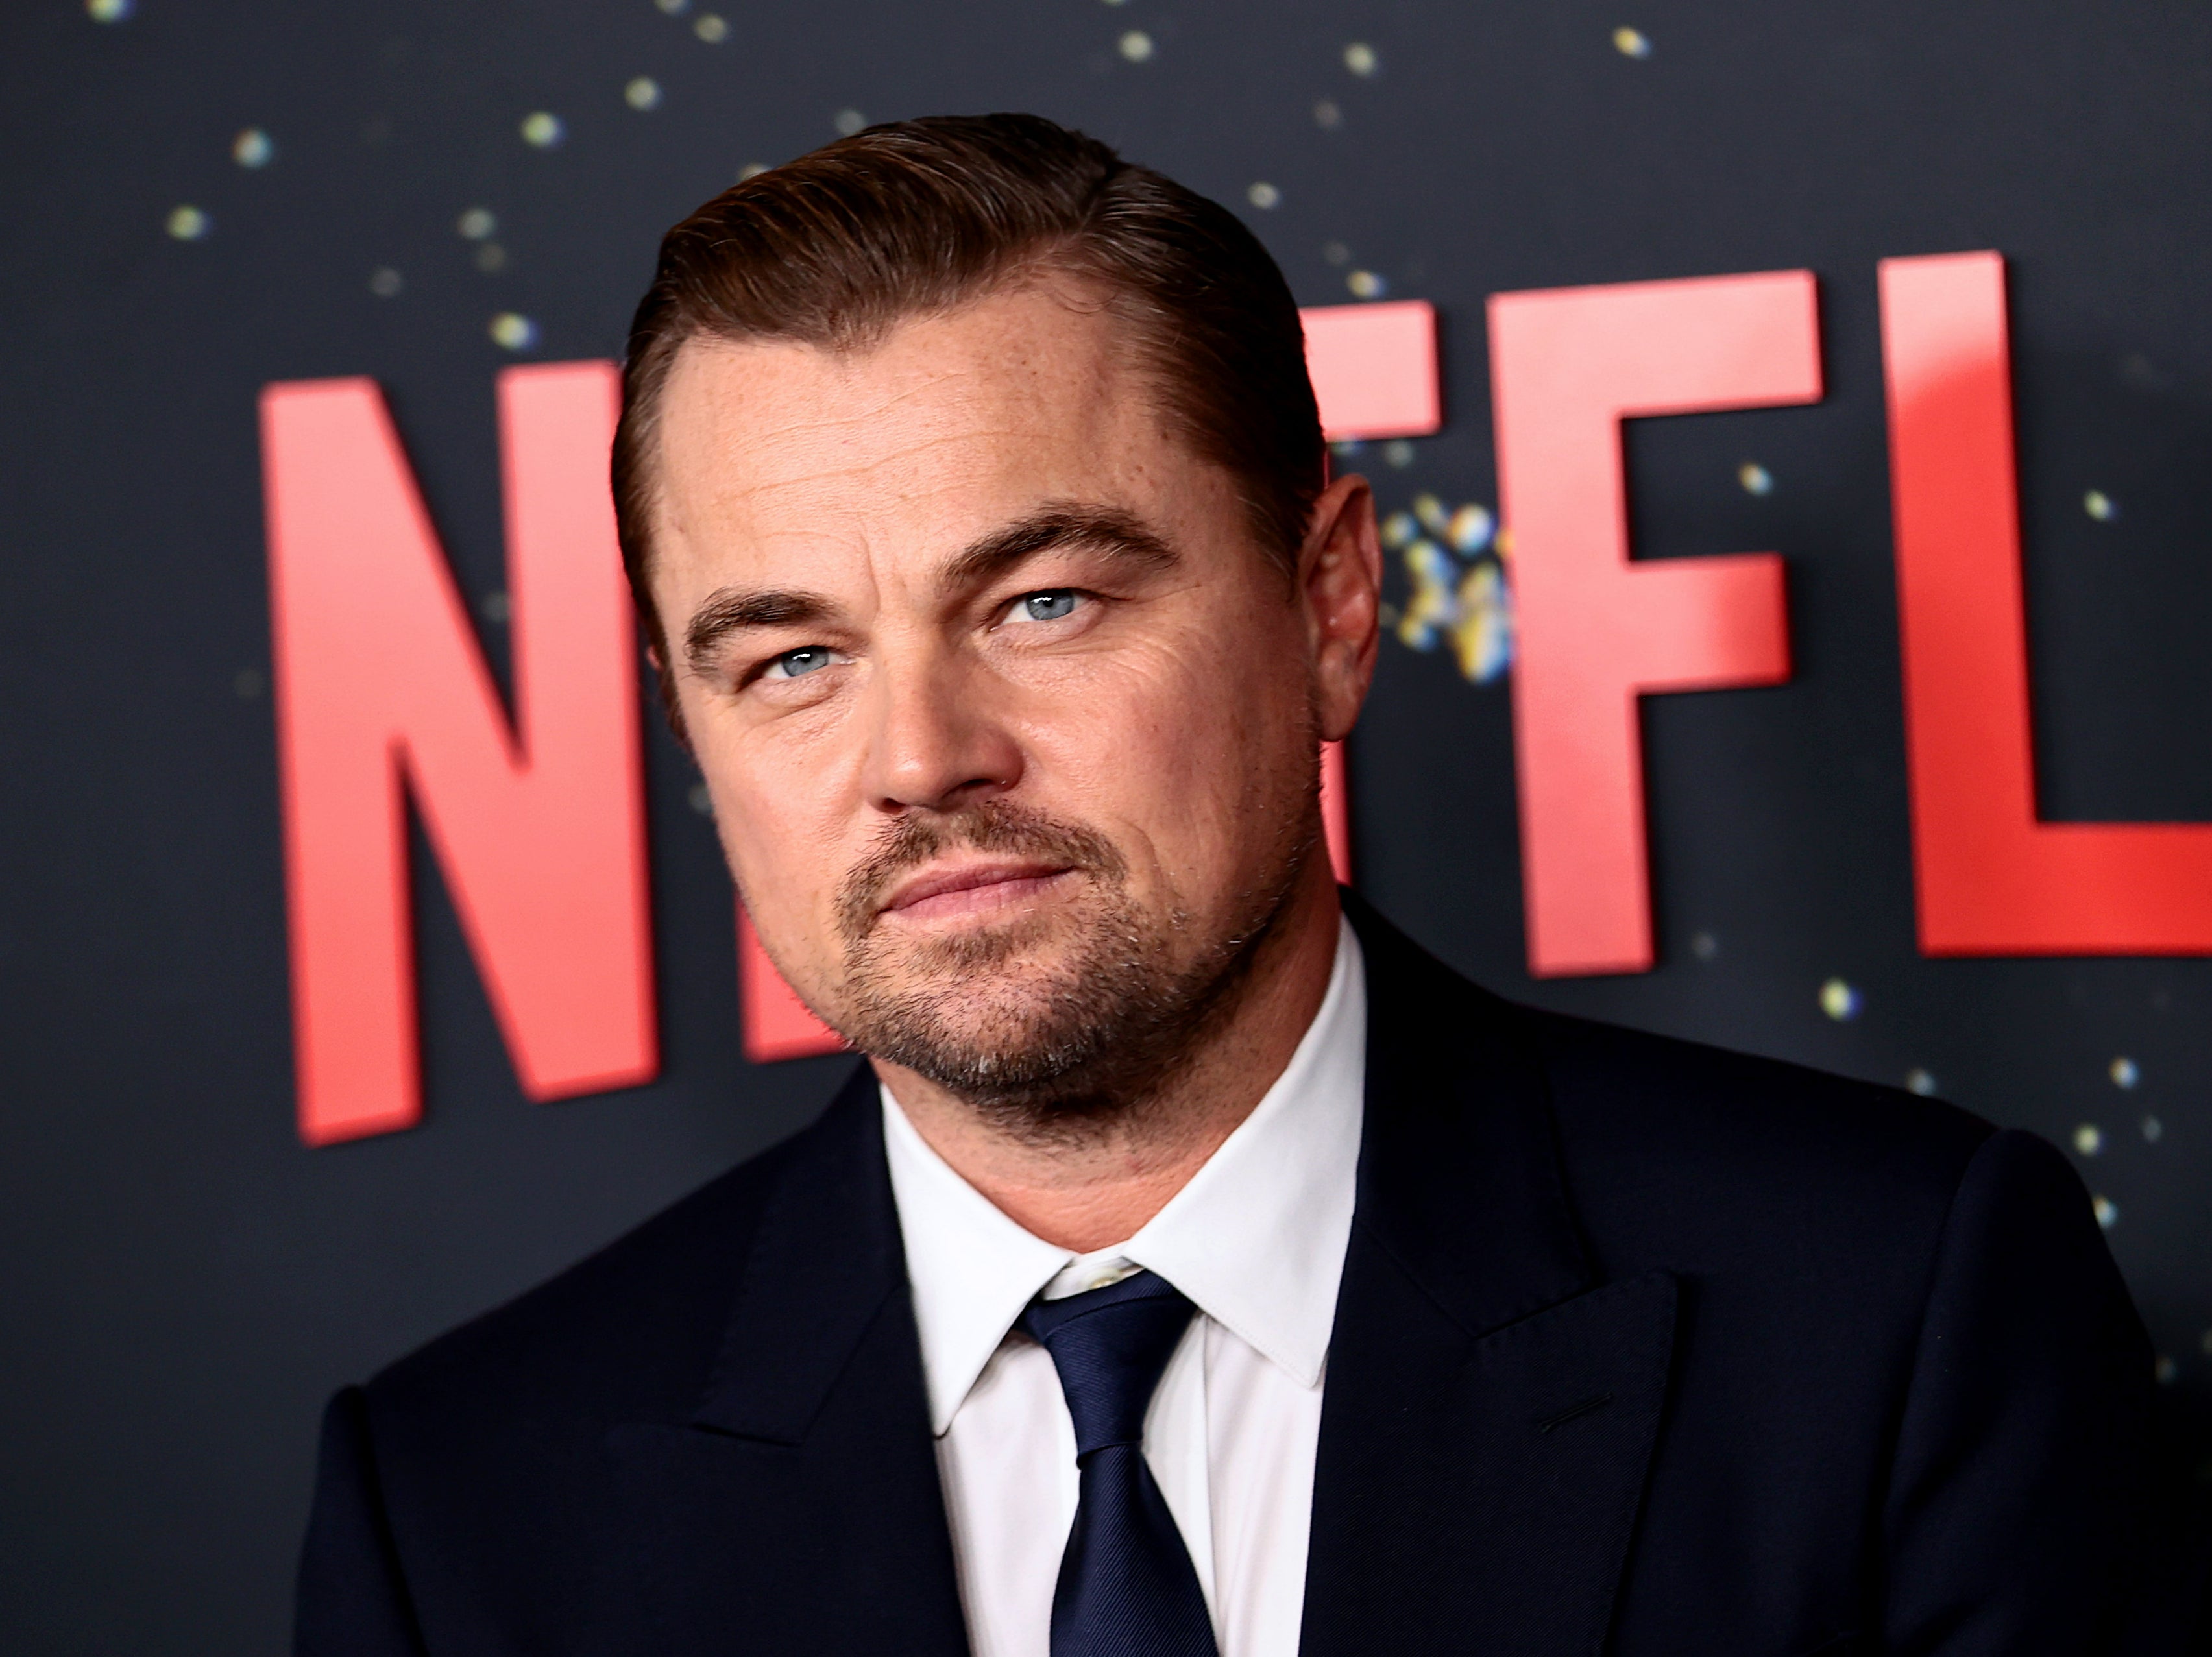 Leonardo DiCaprio filmed dancing at star-studded party in viral video ...